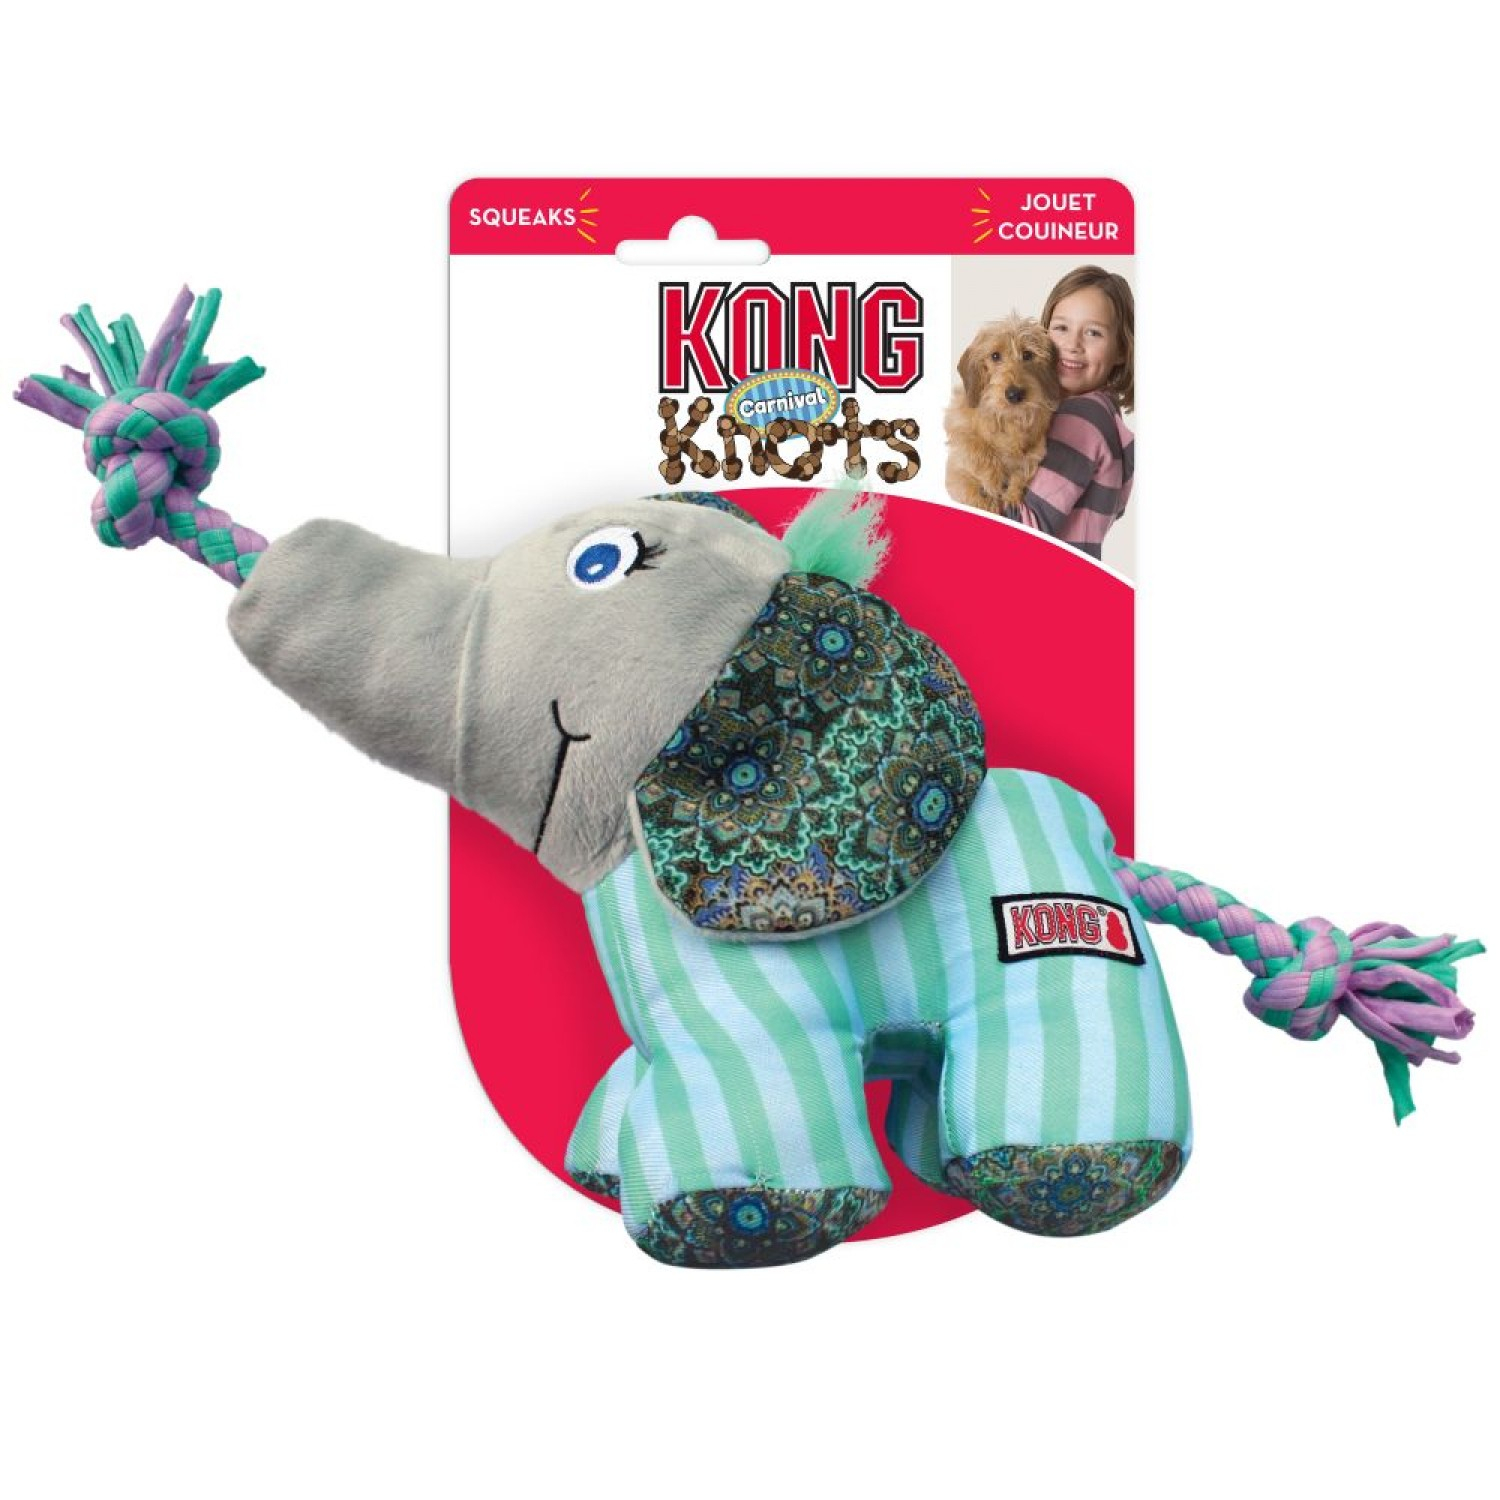 Giocattolo per cane KONG Carnevale Elephant - 2 misure disponibili